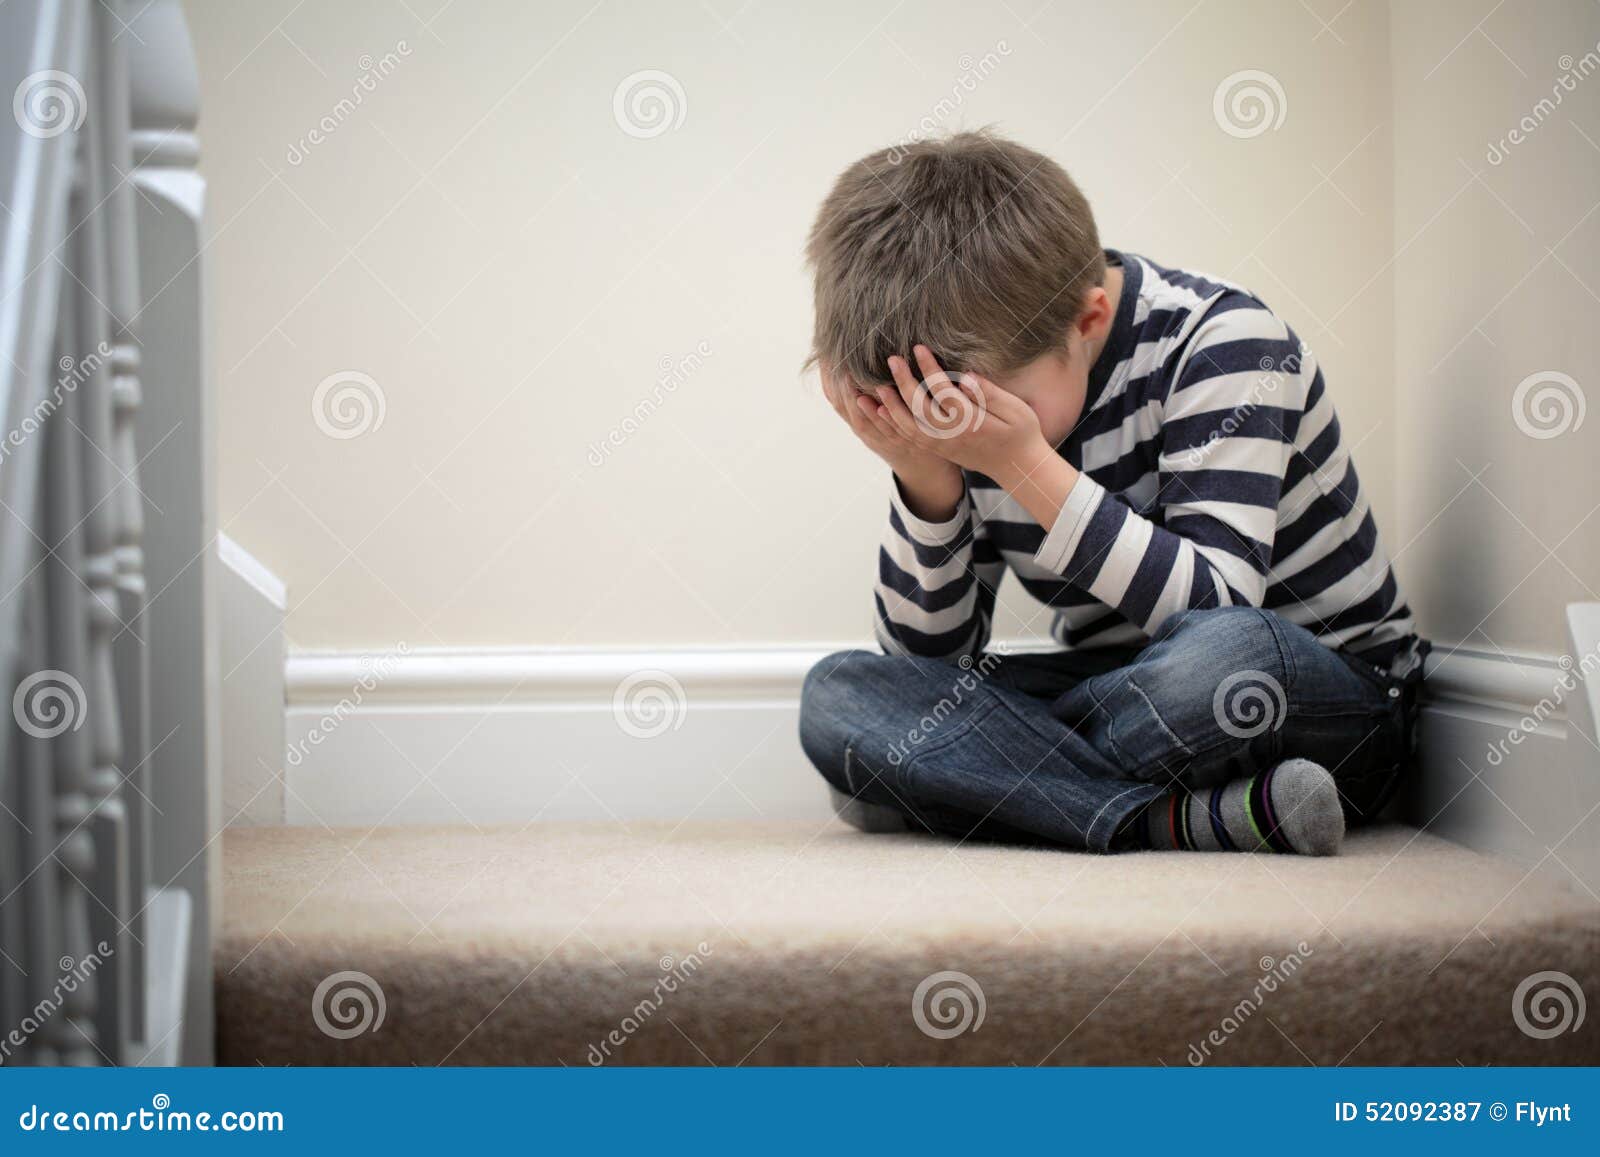 upset problem child sitting on staircase